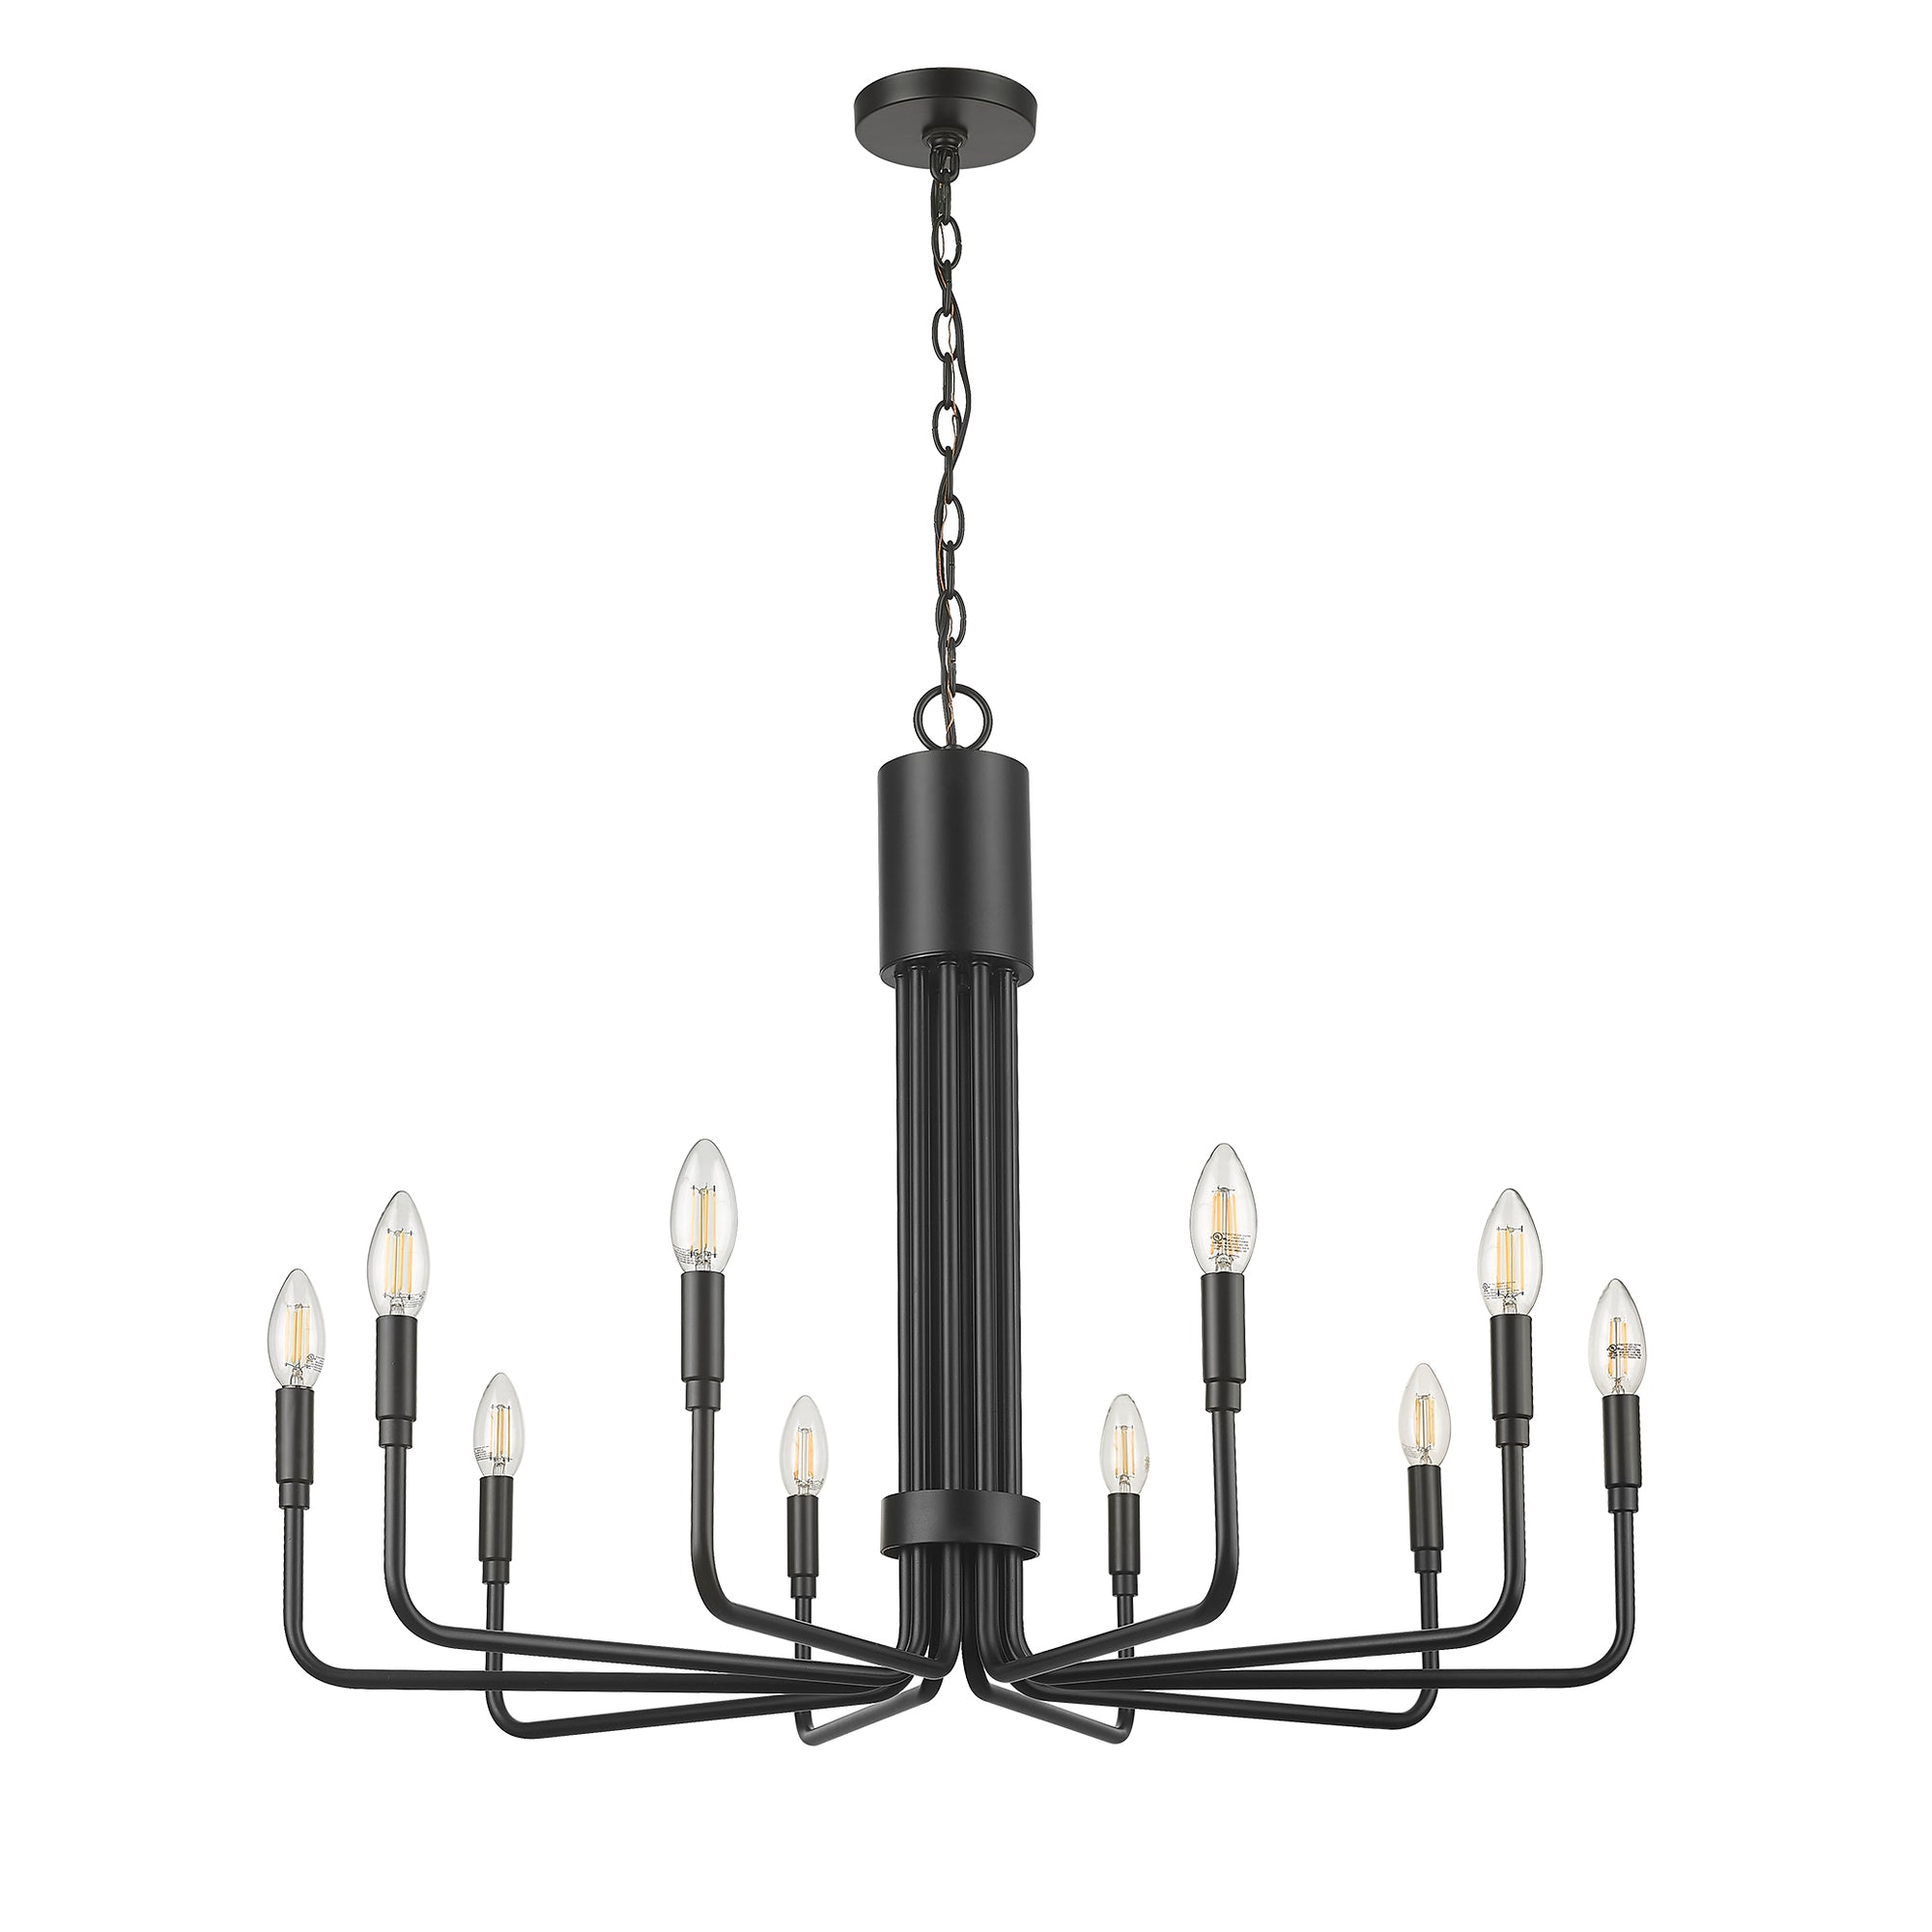 10-light black matte modern candle style chandelier